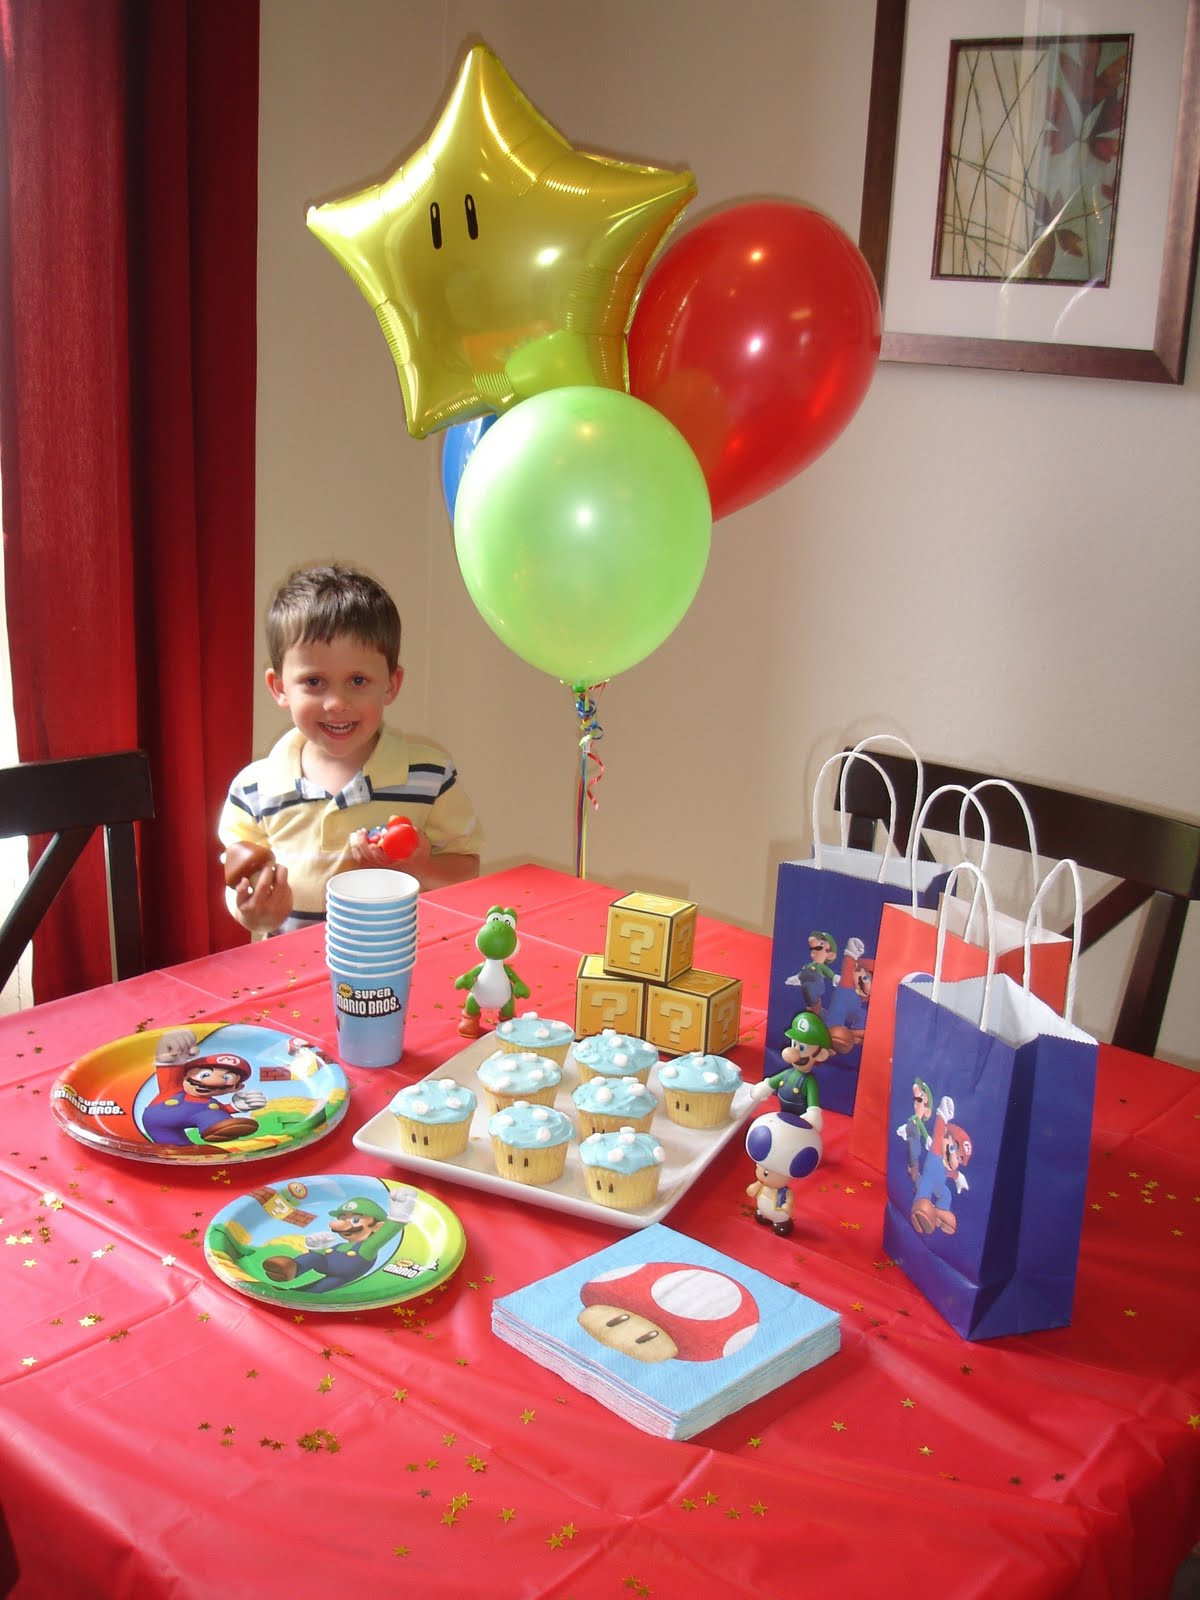 Mario Birthday Party Ideas
 Our Homemade Happiness Super Mario Birthday Party Ideas